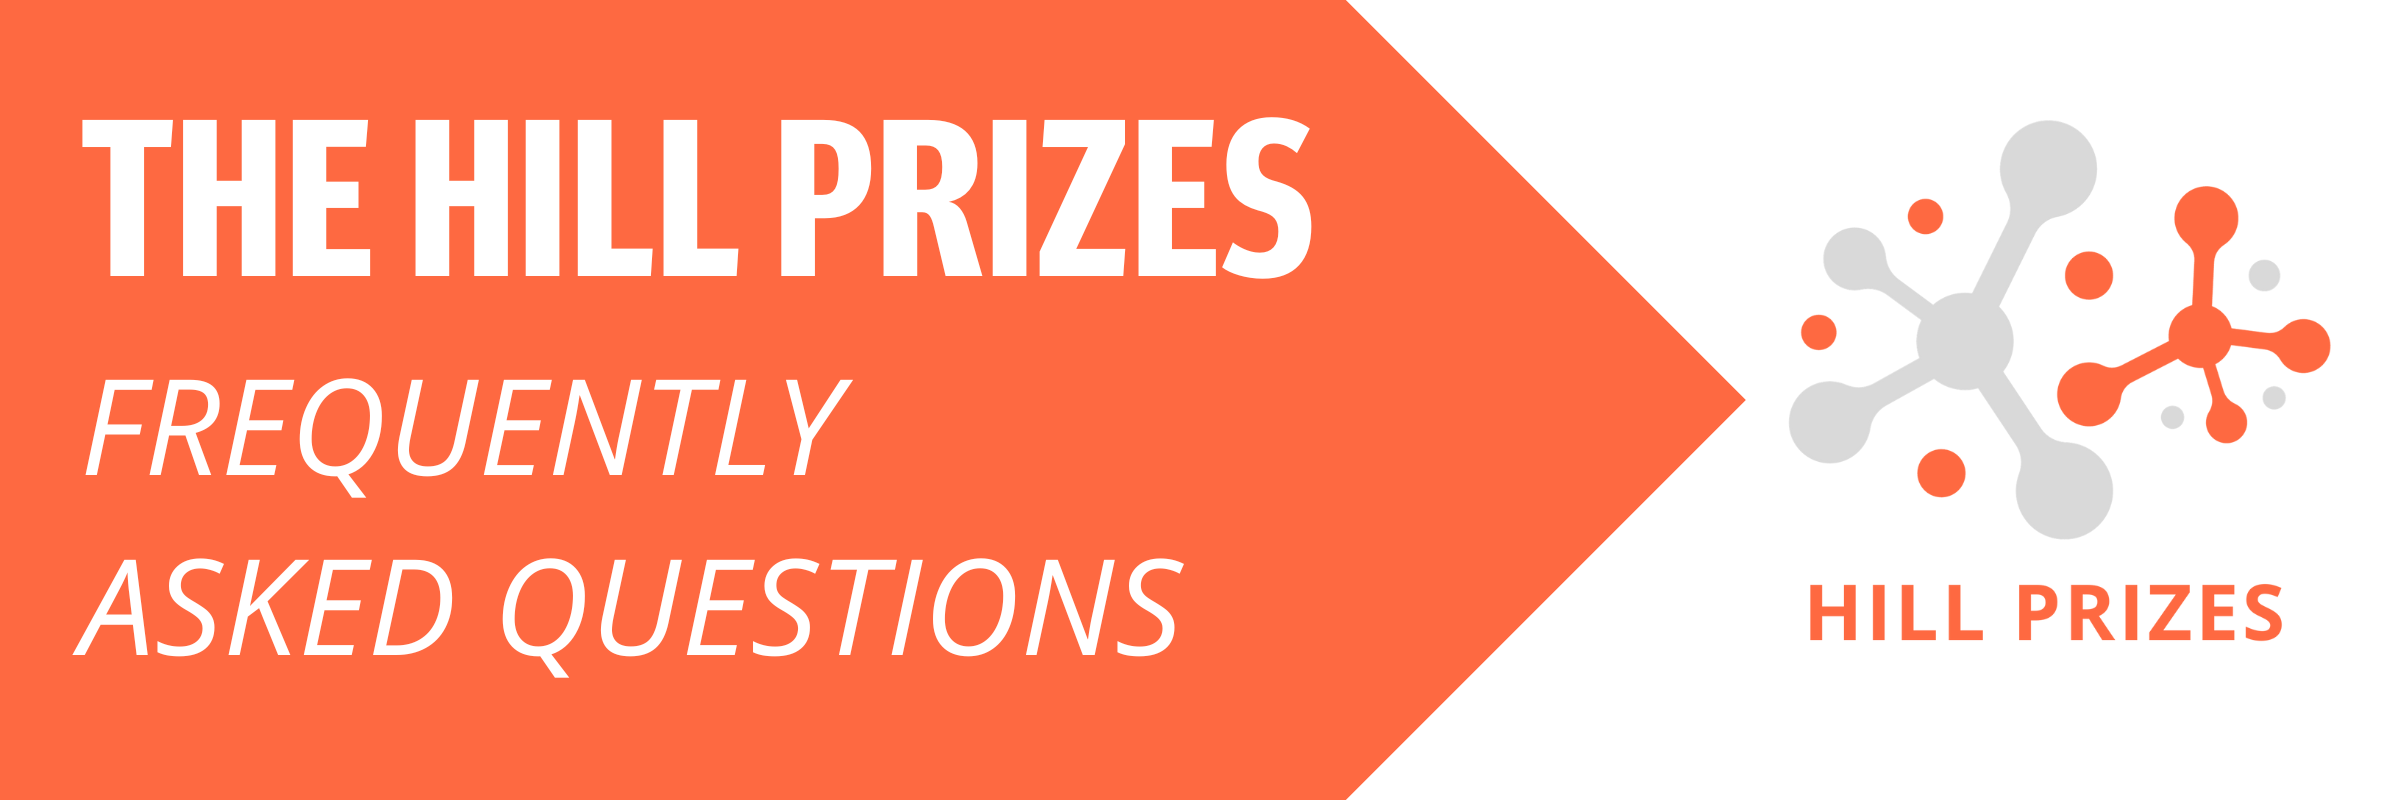 Hill Prizes FAQs Header